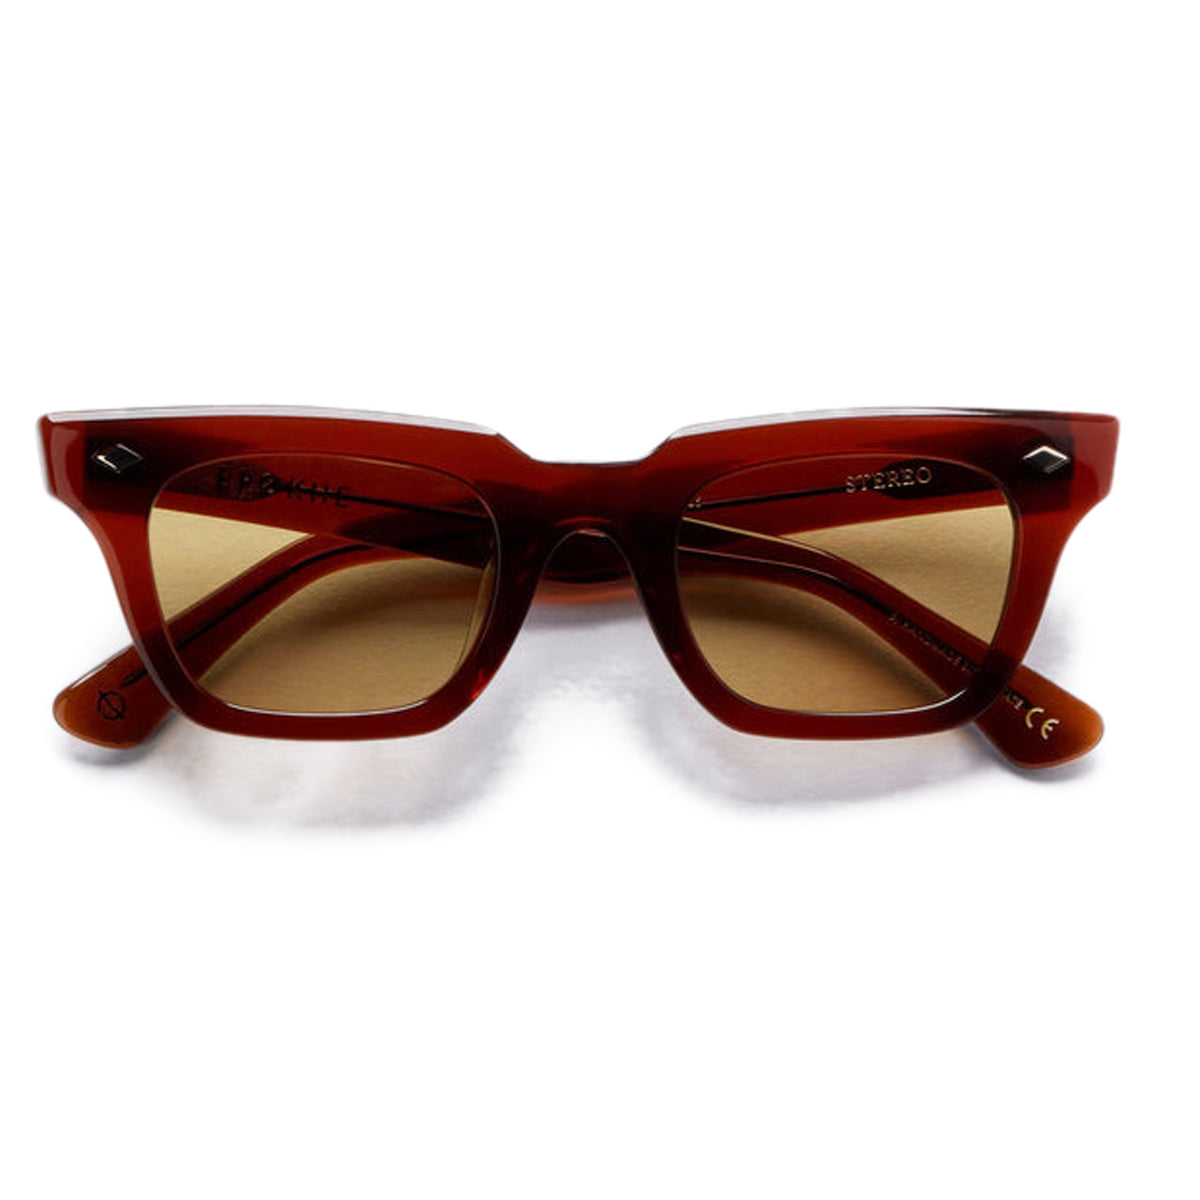 Epokhe Stereo Sunglasses - Maple Polished/Brown image 2